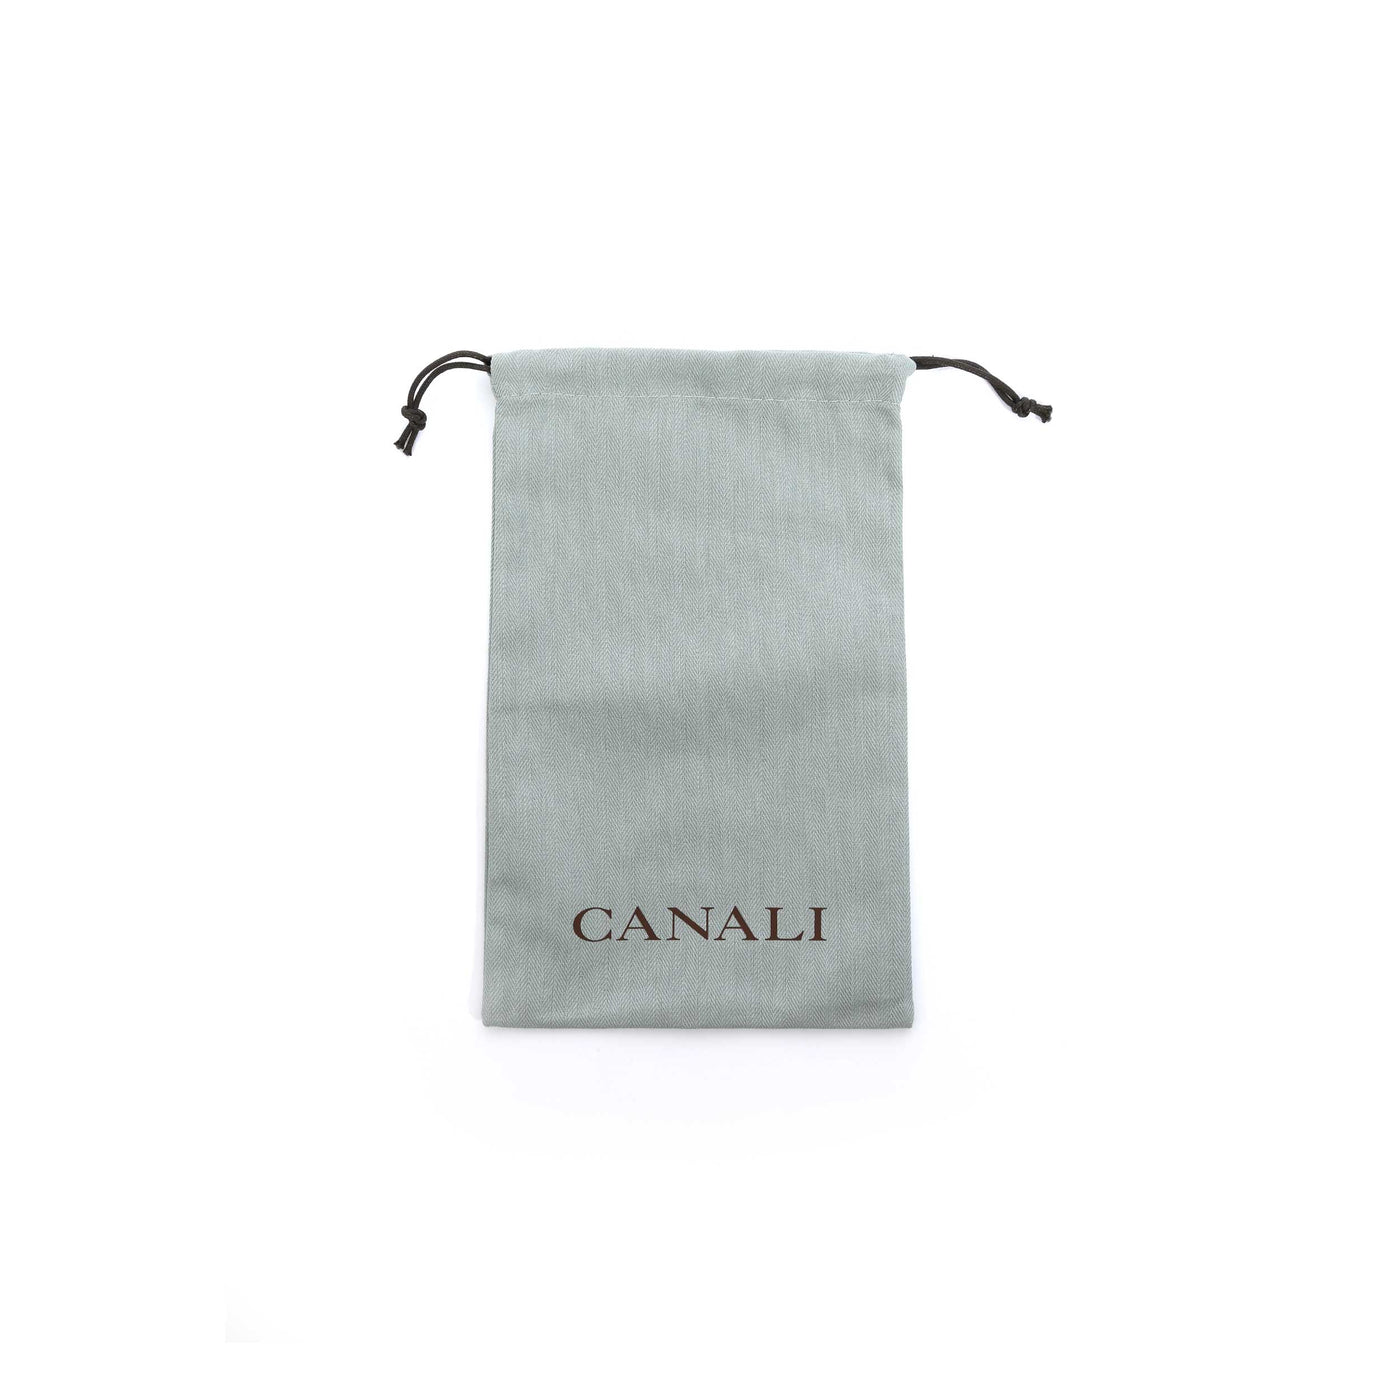 Canali Floral Print Swim Short in Blue Print Dust Bag